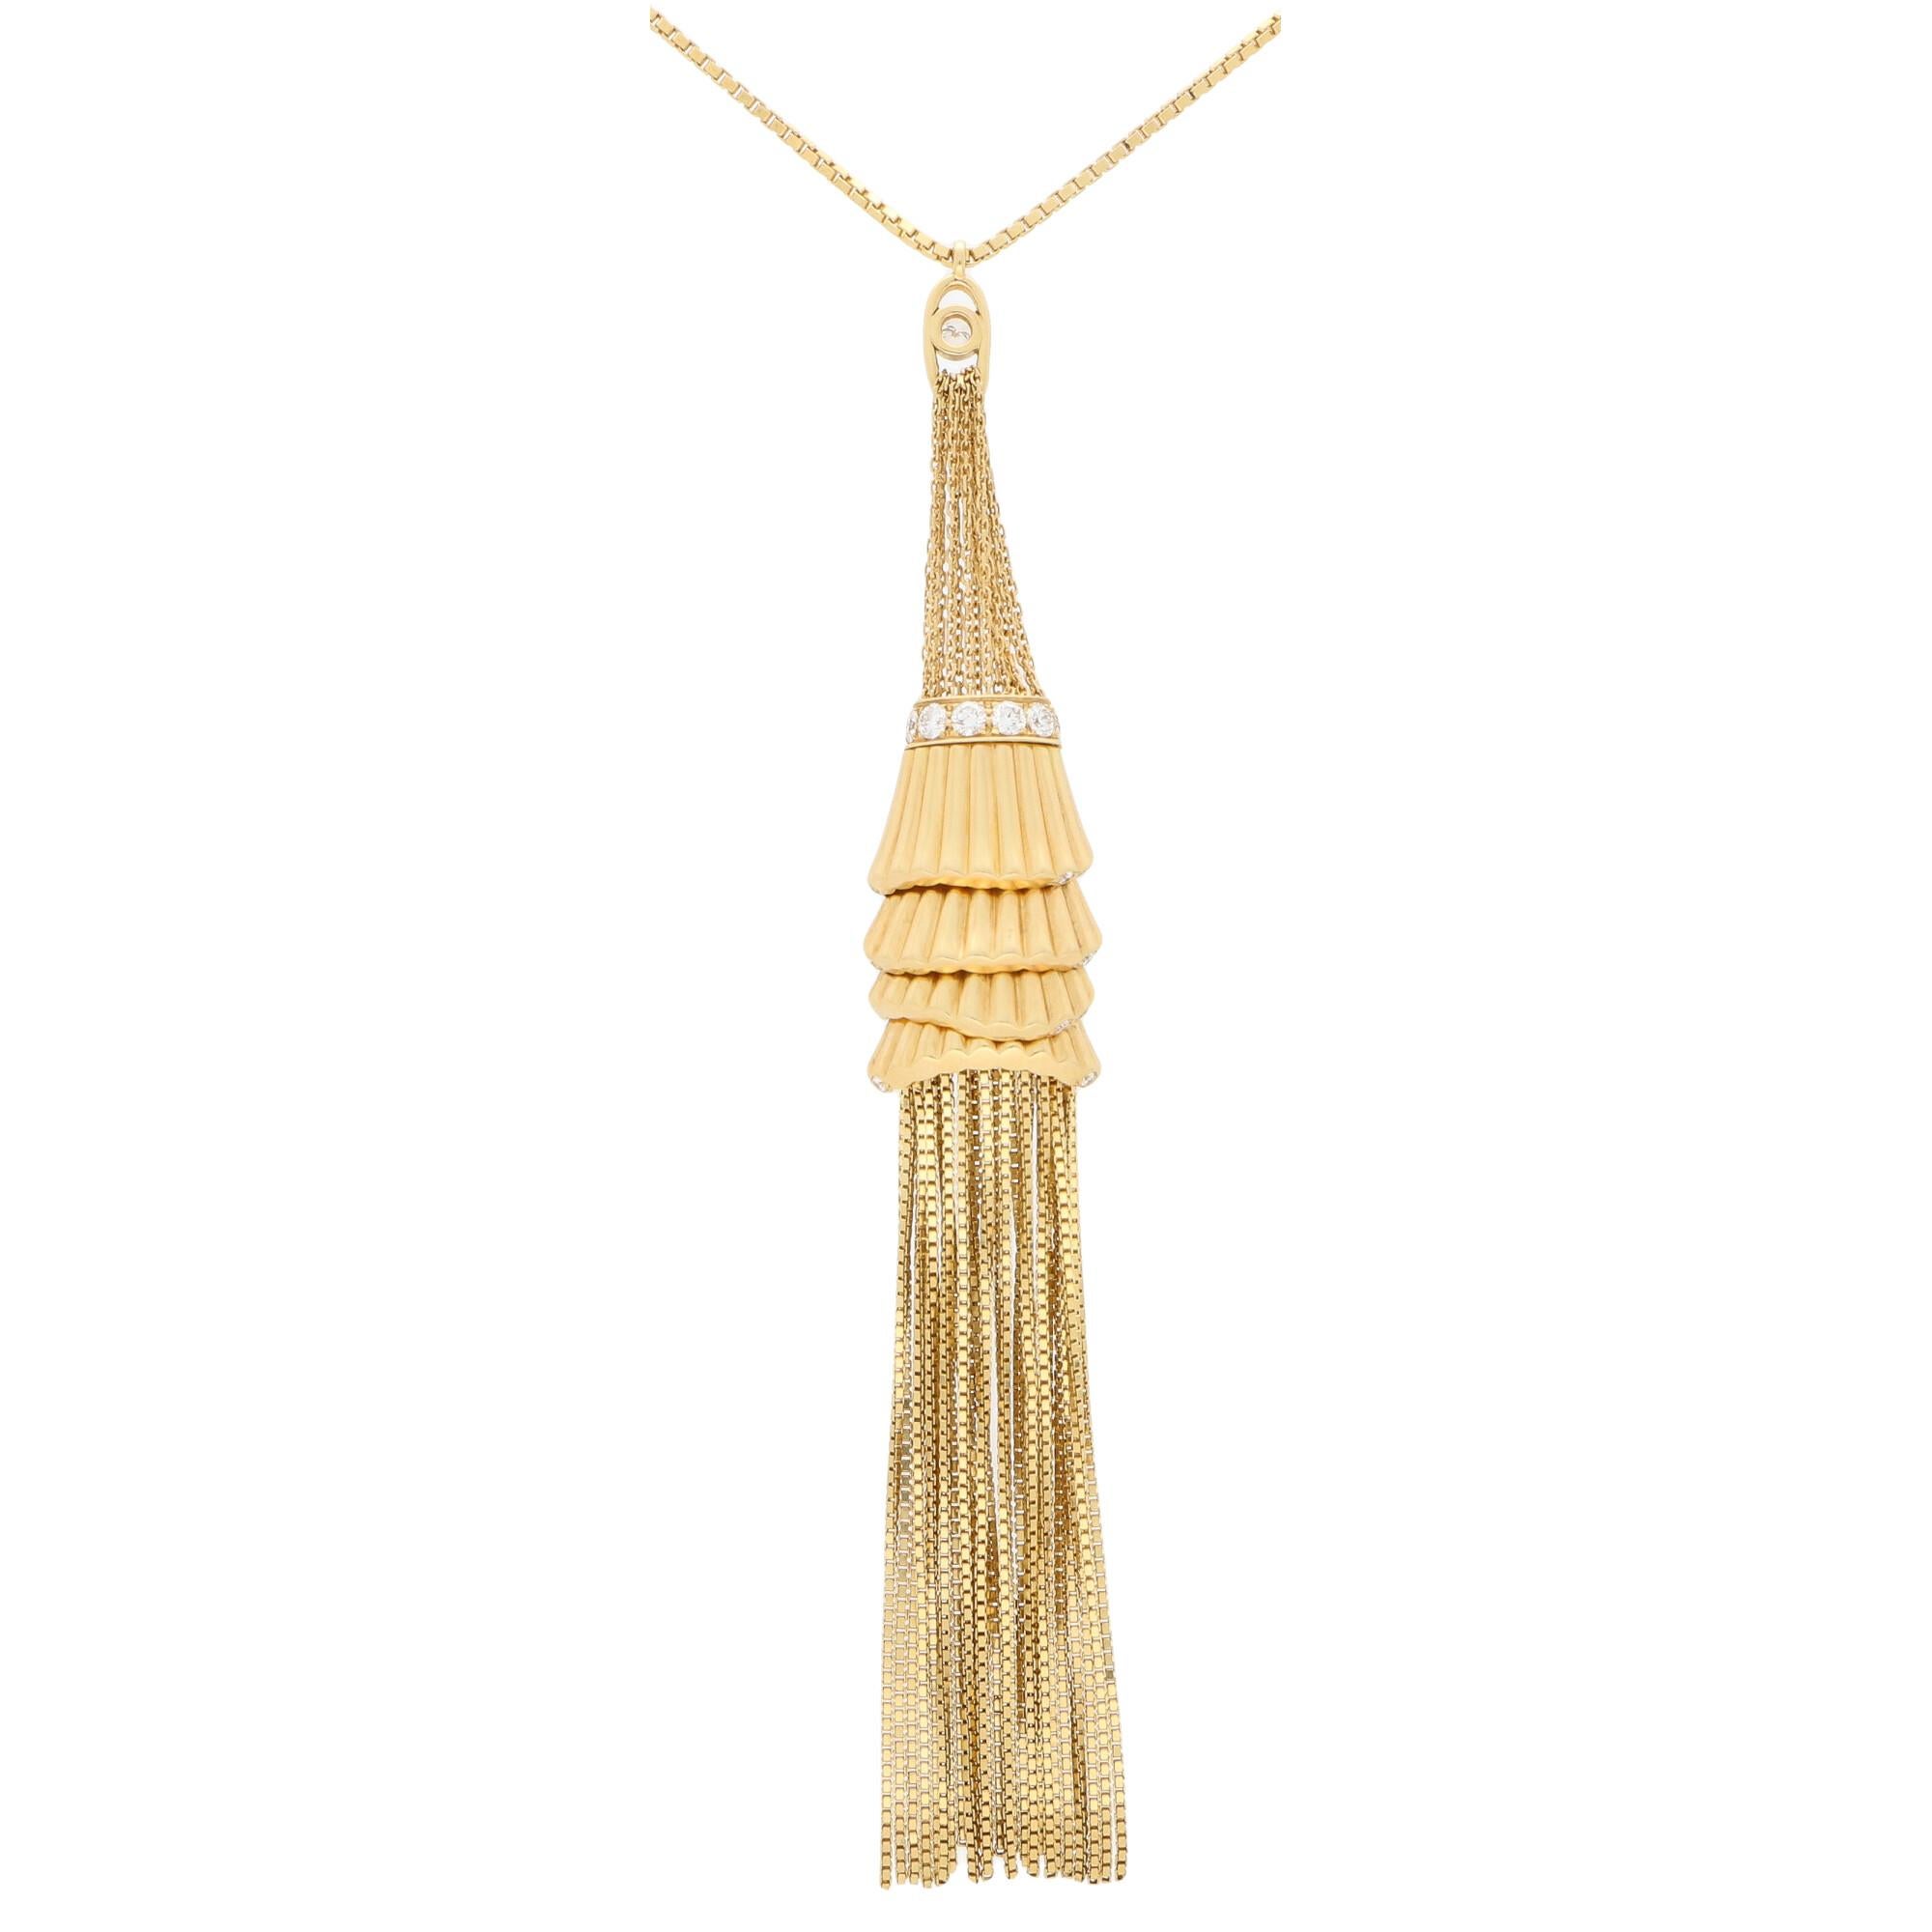 Retro Vintage Boucheron 'Frou Frou' Diamond Tassel Necklace Set in 18k Yellow Gold